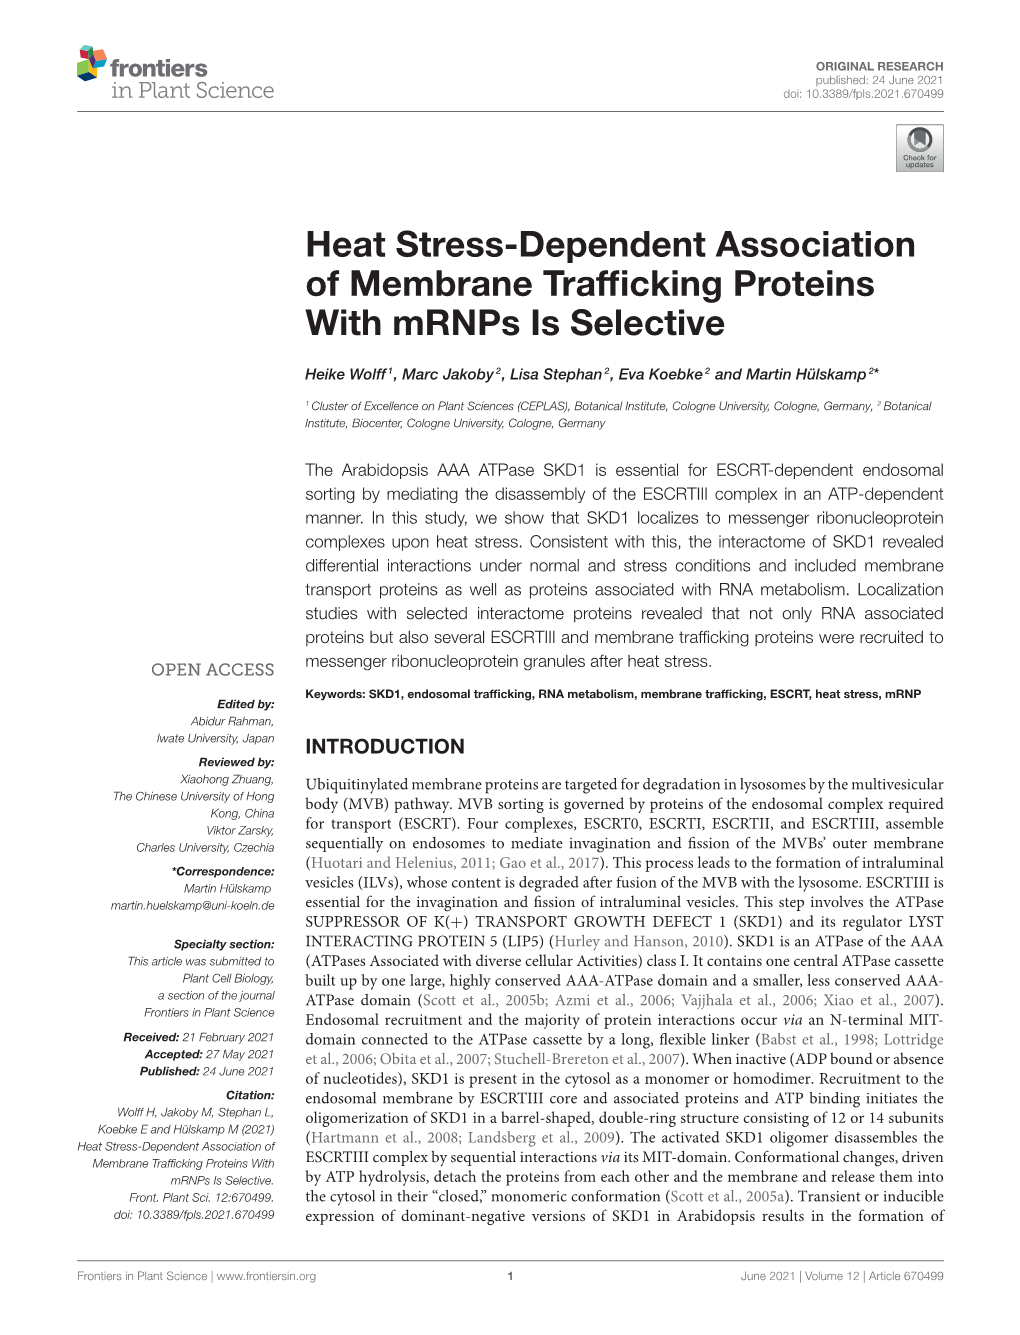 Heat Stress-Dependent Association of Membrane Trafficking Proteins